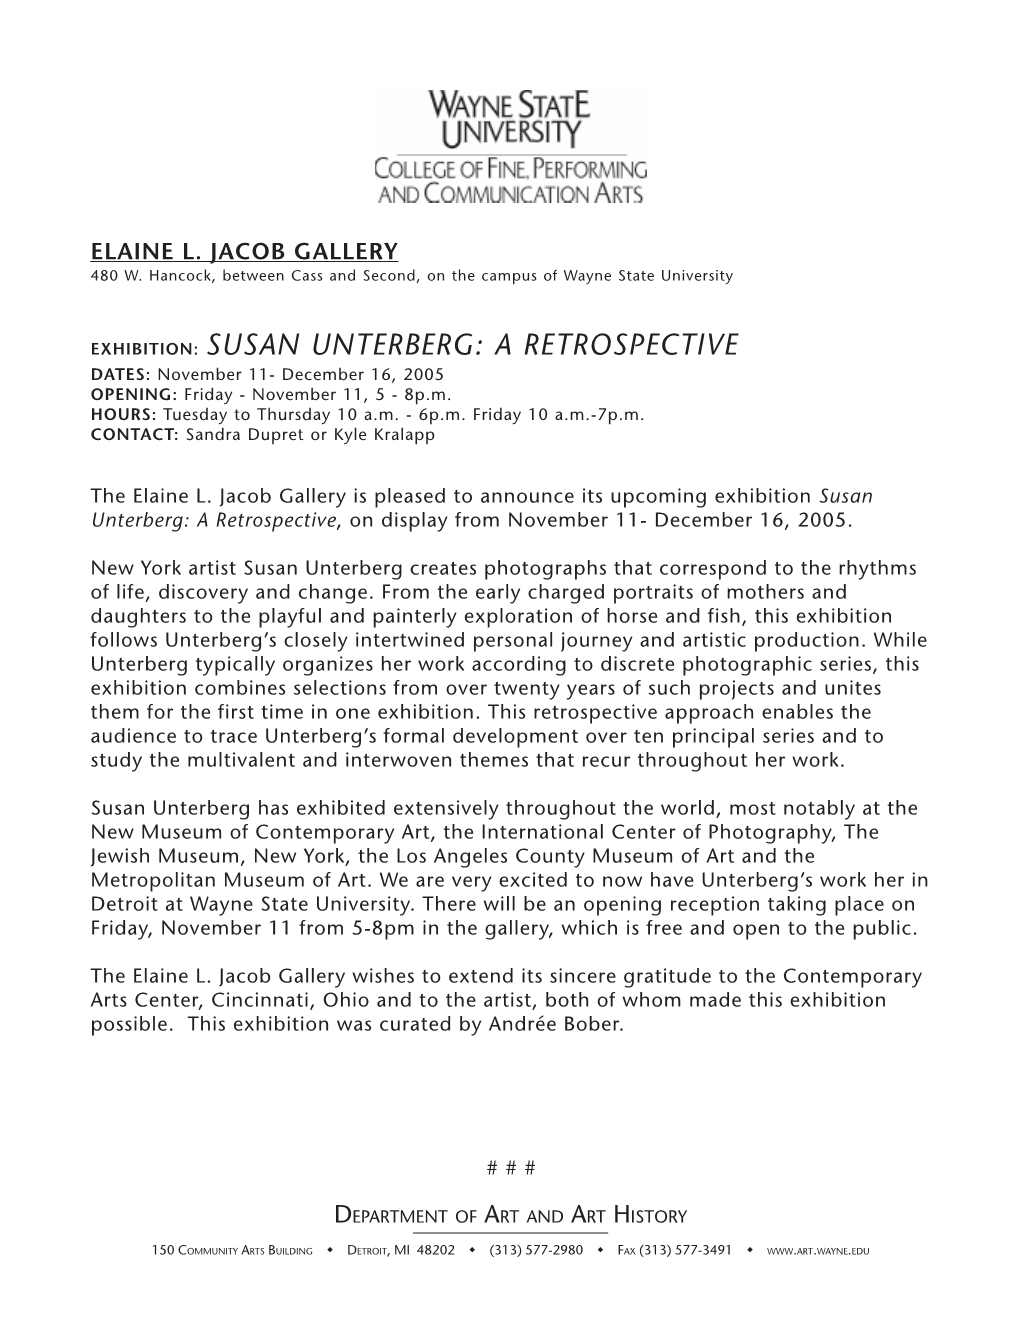 SUSAN UNTERBERG: a RETROSPECTIVE DATES: November 11- December 16, 2005 OPENING: Friday - November 11, 5 - 8P.M